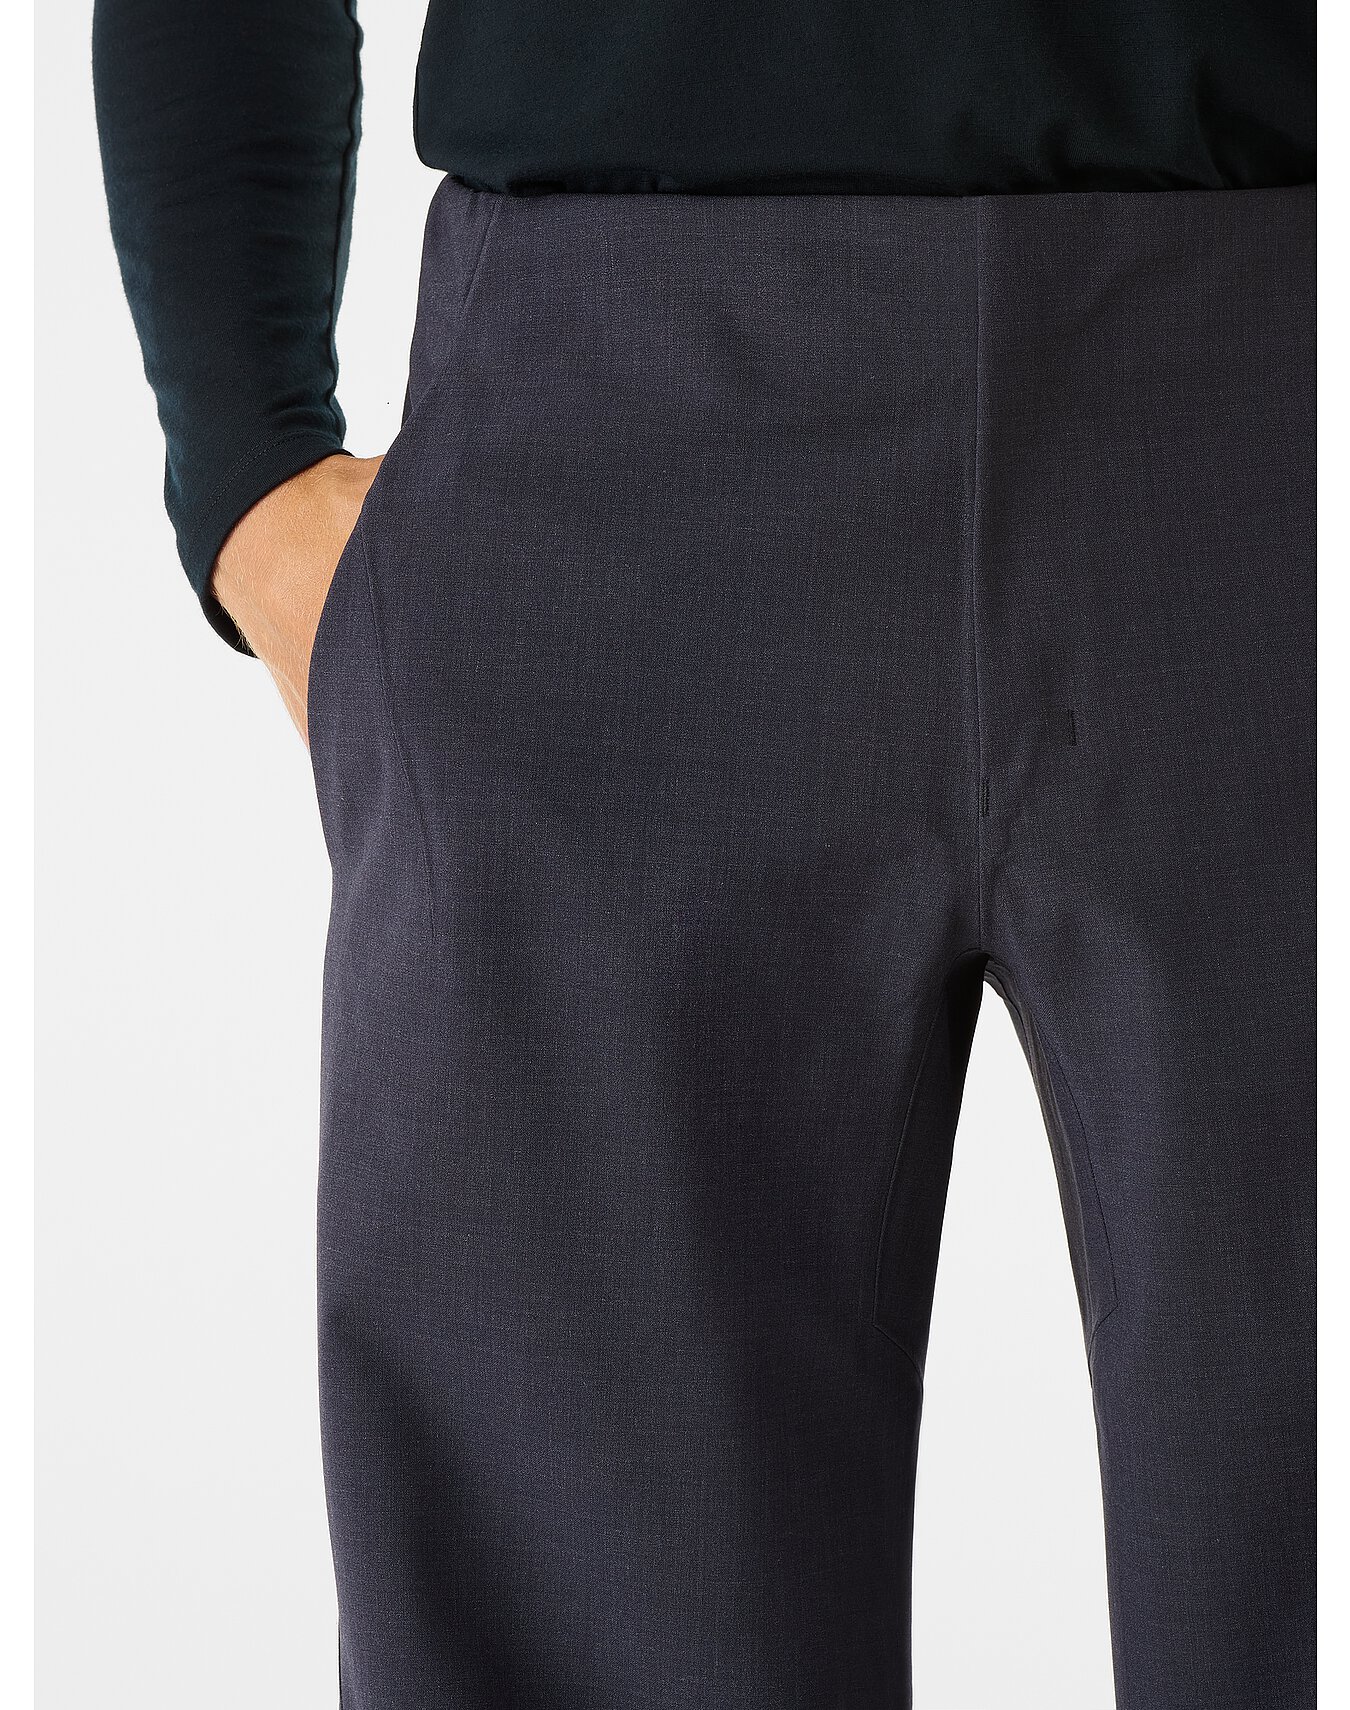 Spere Tech Wool Pant Men's | Arc'teryx Outlet